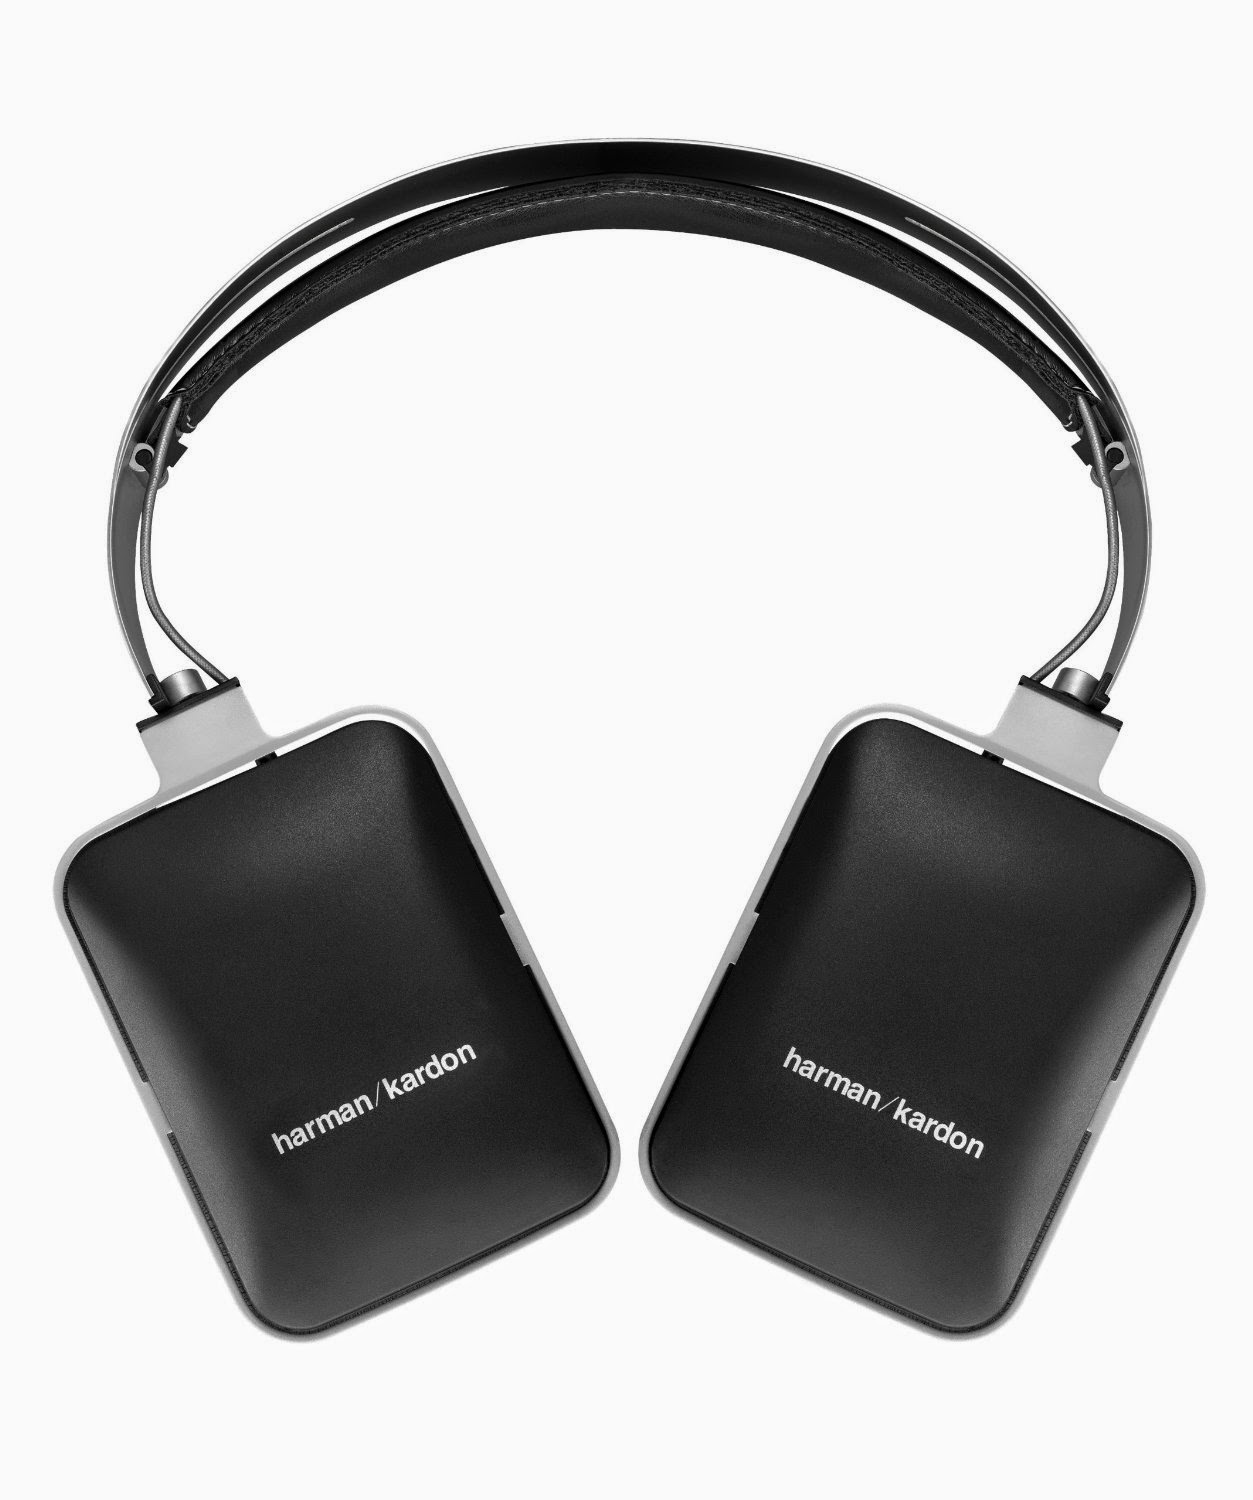 Best Harman Kardon BT Premium Over-Ear Headphones with Bluetooth Technology On Sale Now, Premium over-ear, Bluetooth headphones